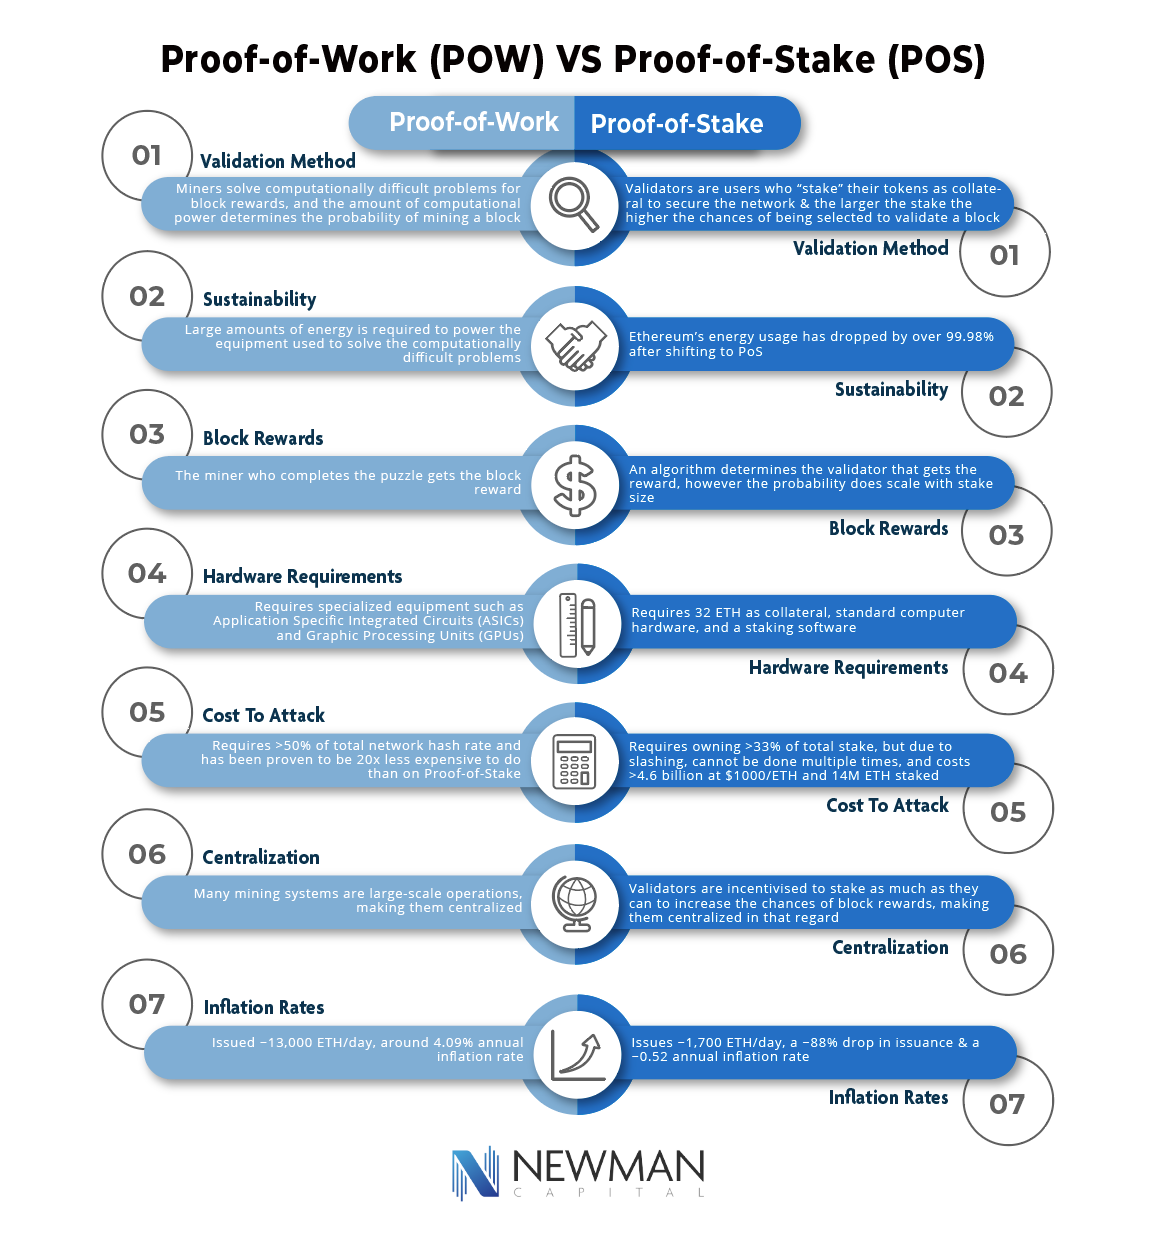 POW vs POS by Newman Capital